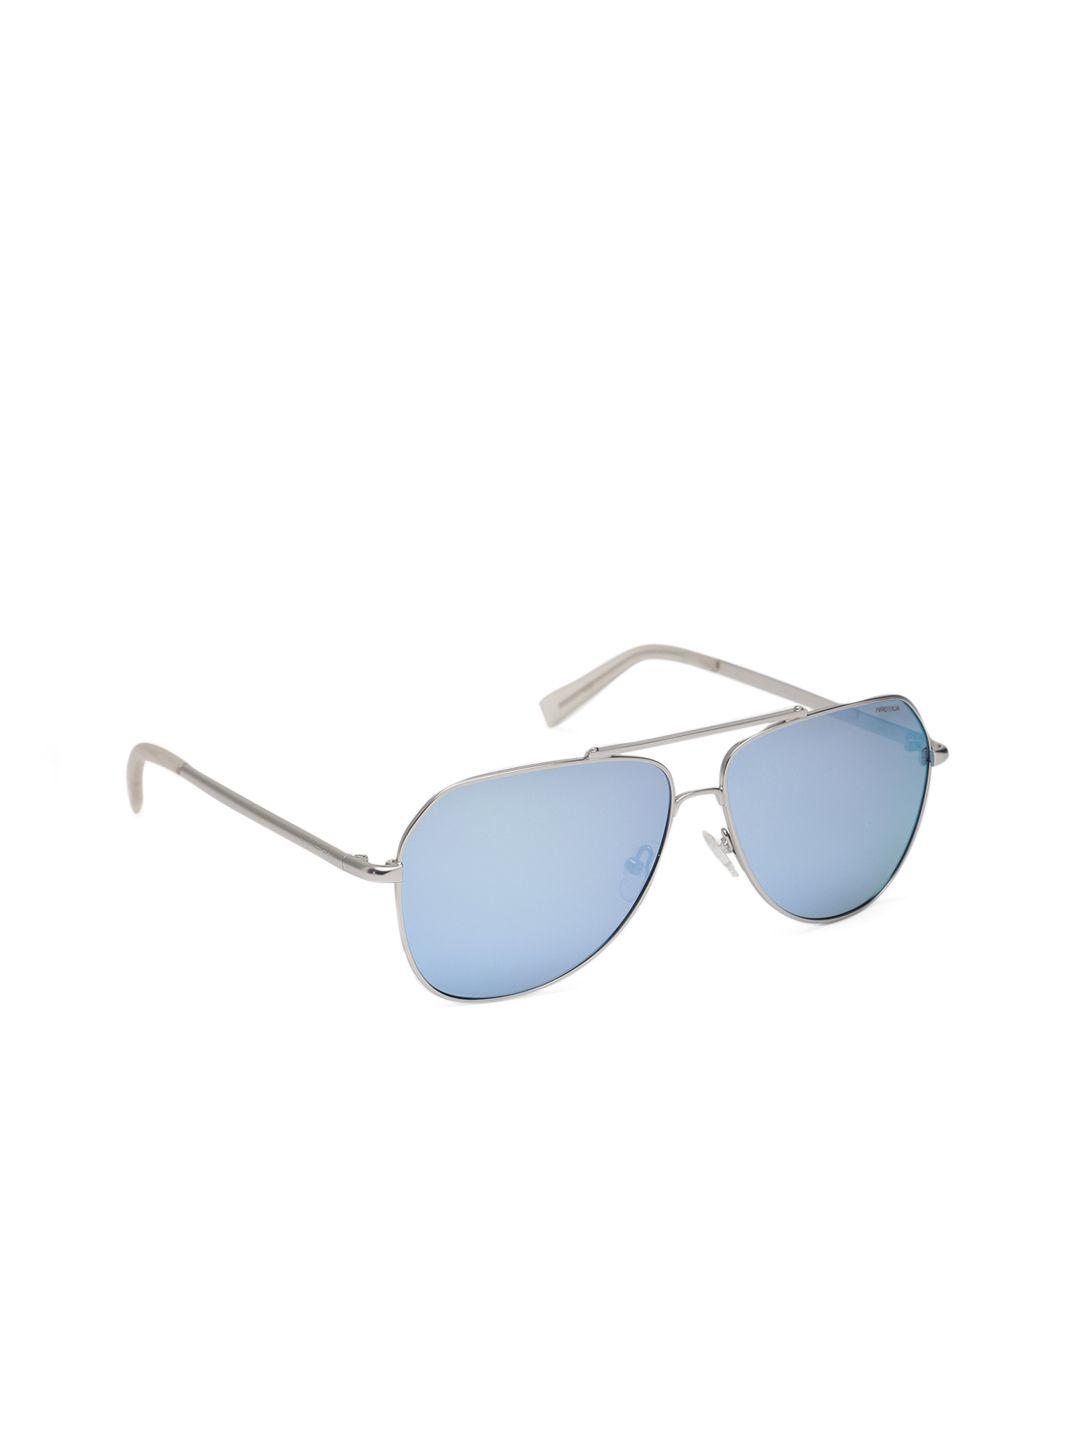 nautica men blue lens & silver-toned aviator sunglasses with uv protected lens 4636p 040